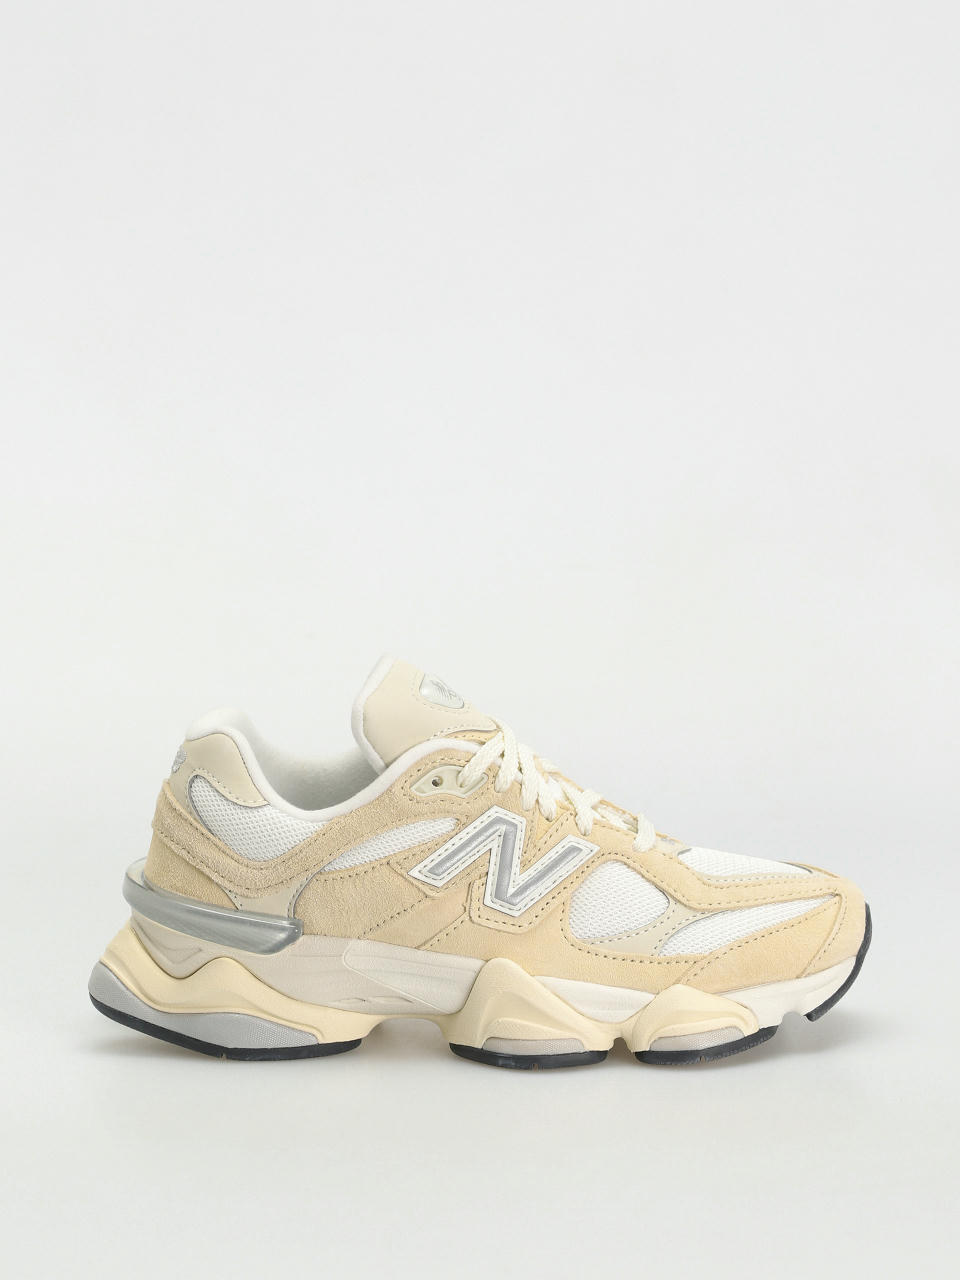 New Balance 9060 Shoes (calcium)